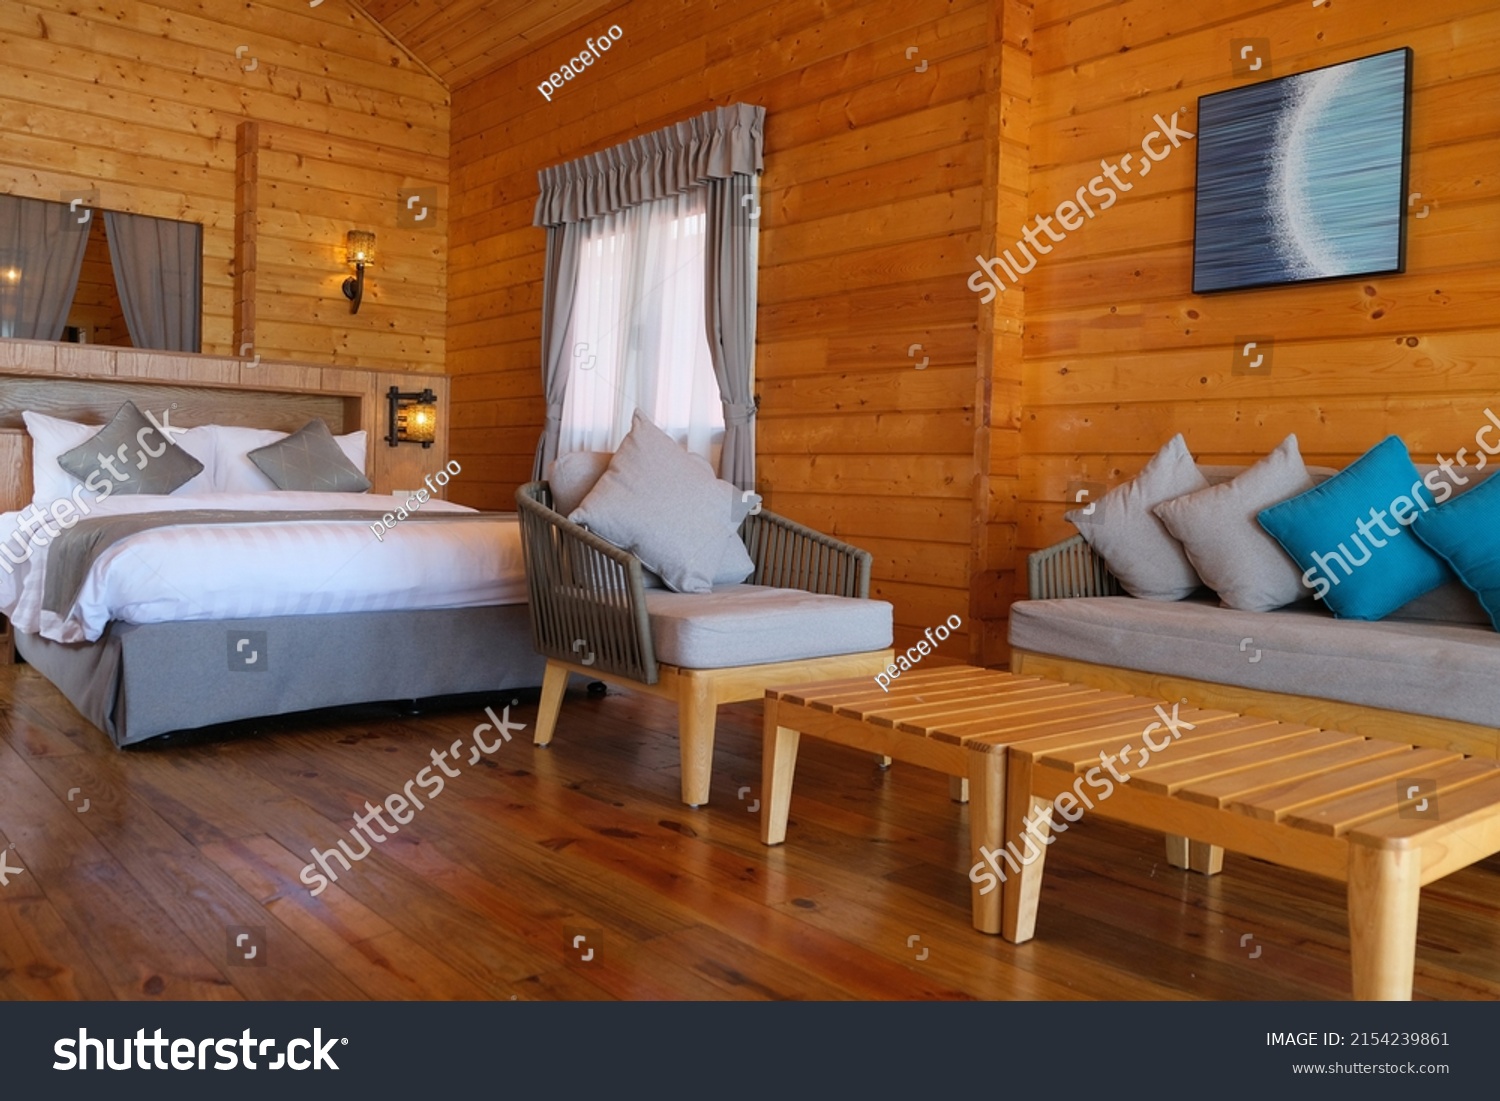 Stock Photo Sabah Malaysia Apr Beautiful Wooden Bedroom With Beach Theme Design 2154239861 